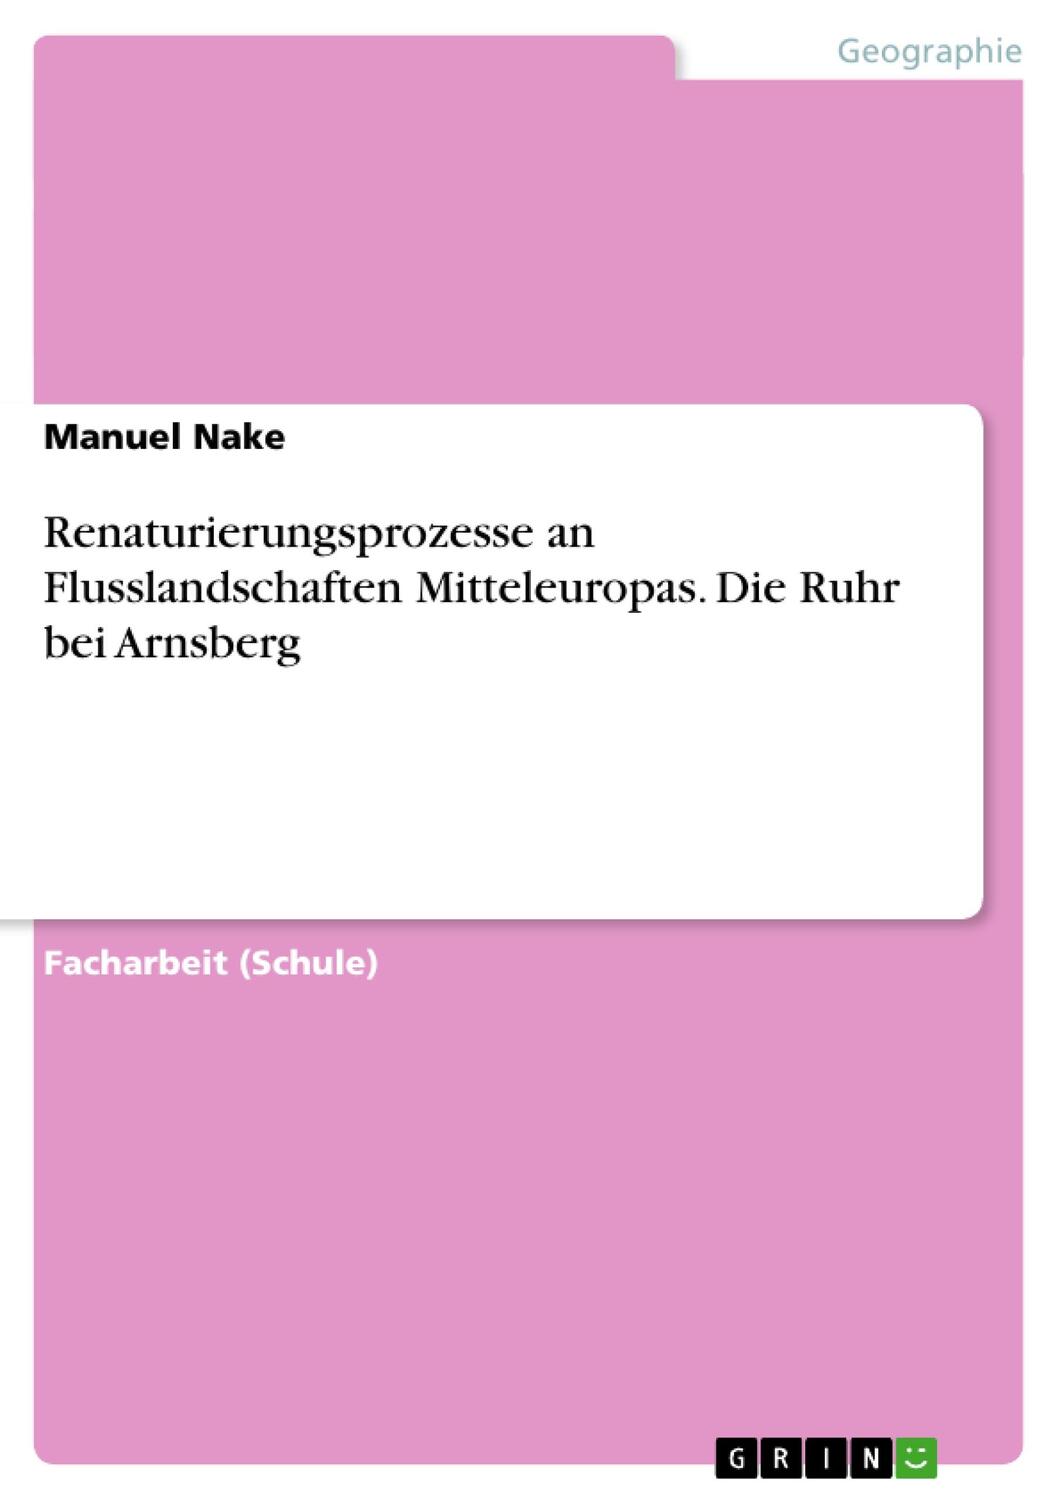 Renaturierungsprozesse an Flusslandschaften Mitteleuropas. Die Ruhr bei Arnsberg - Nake, Manuel